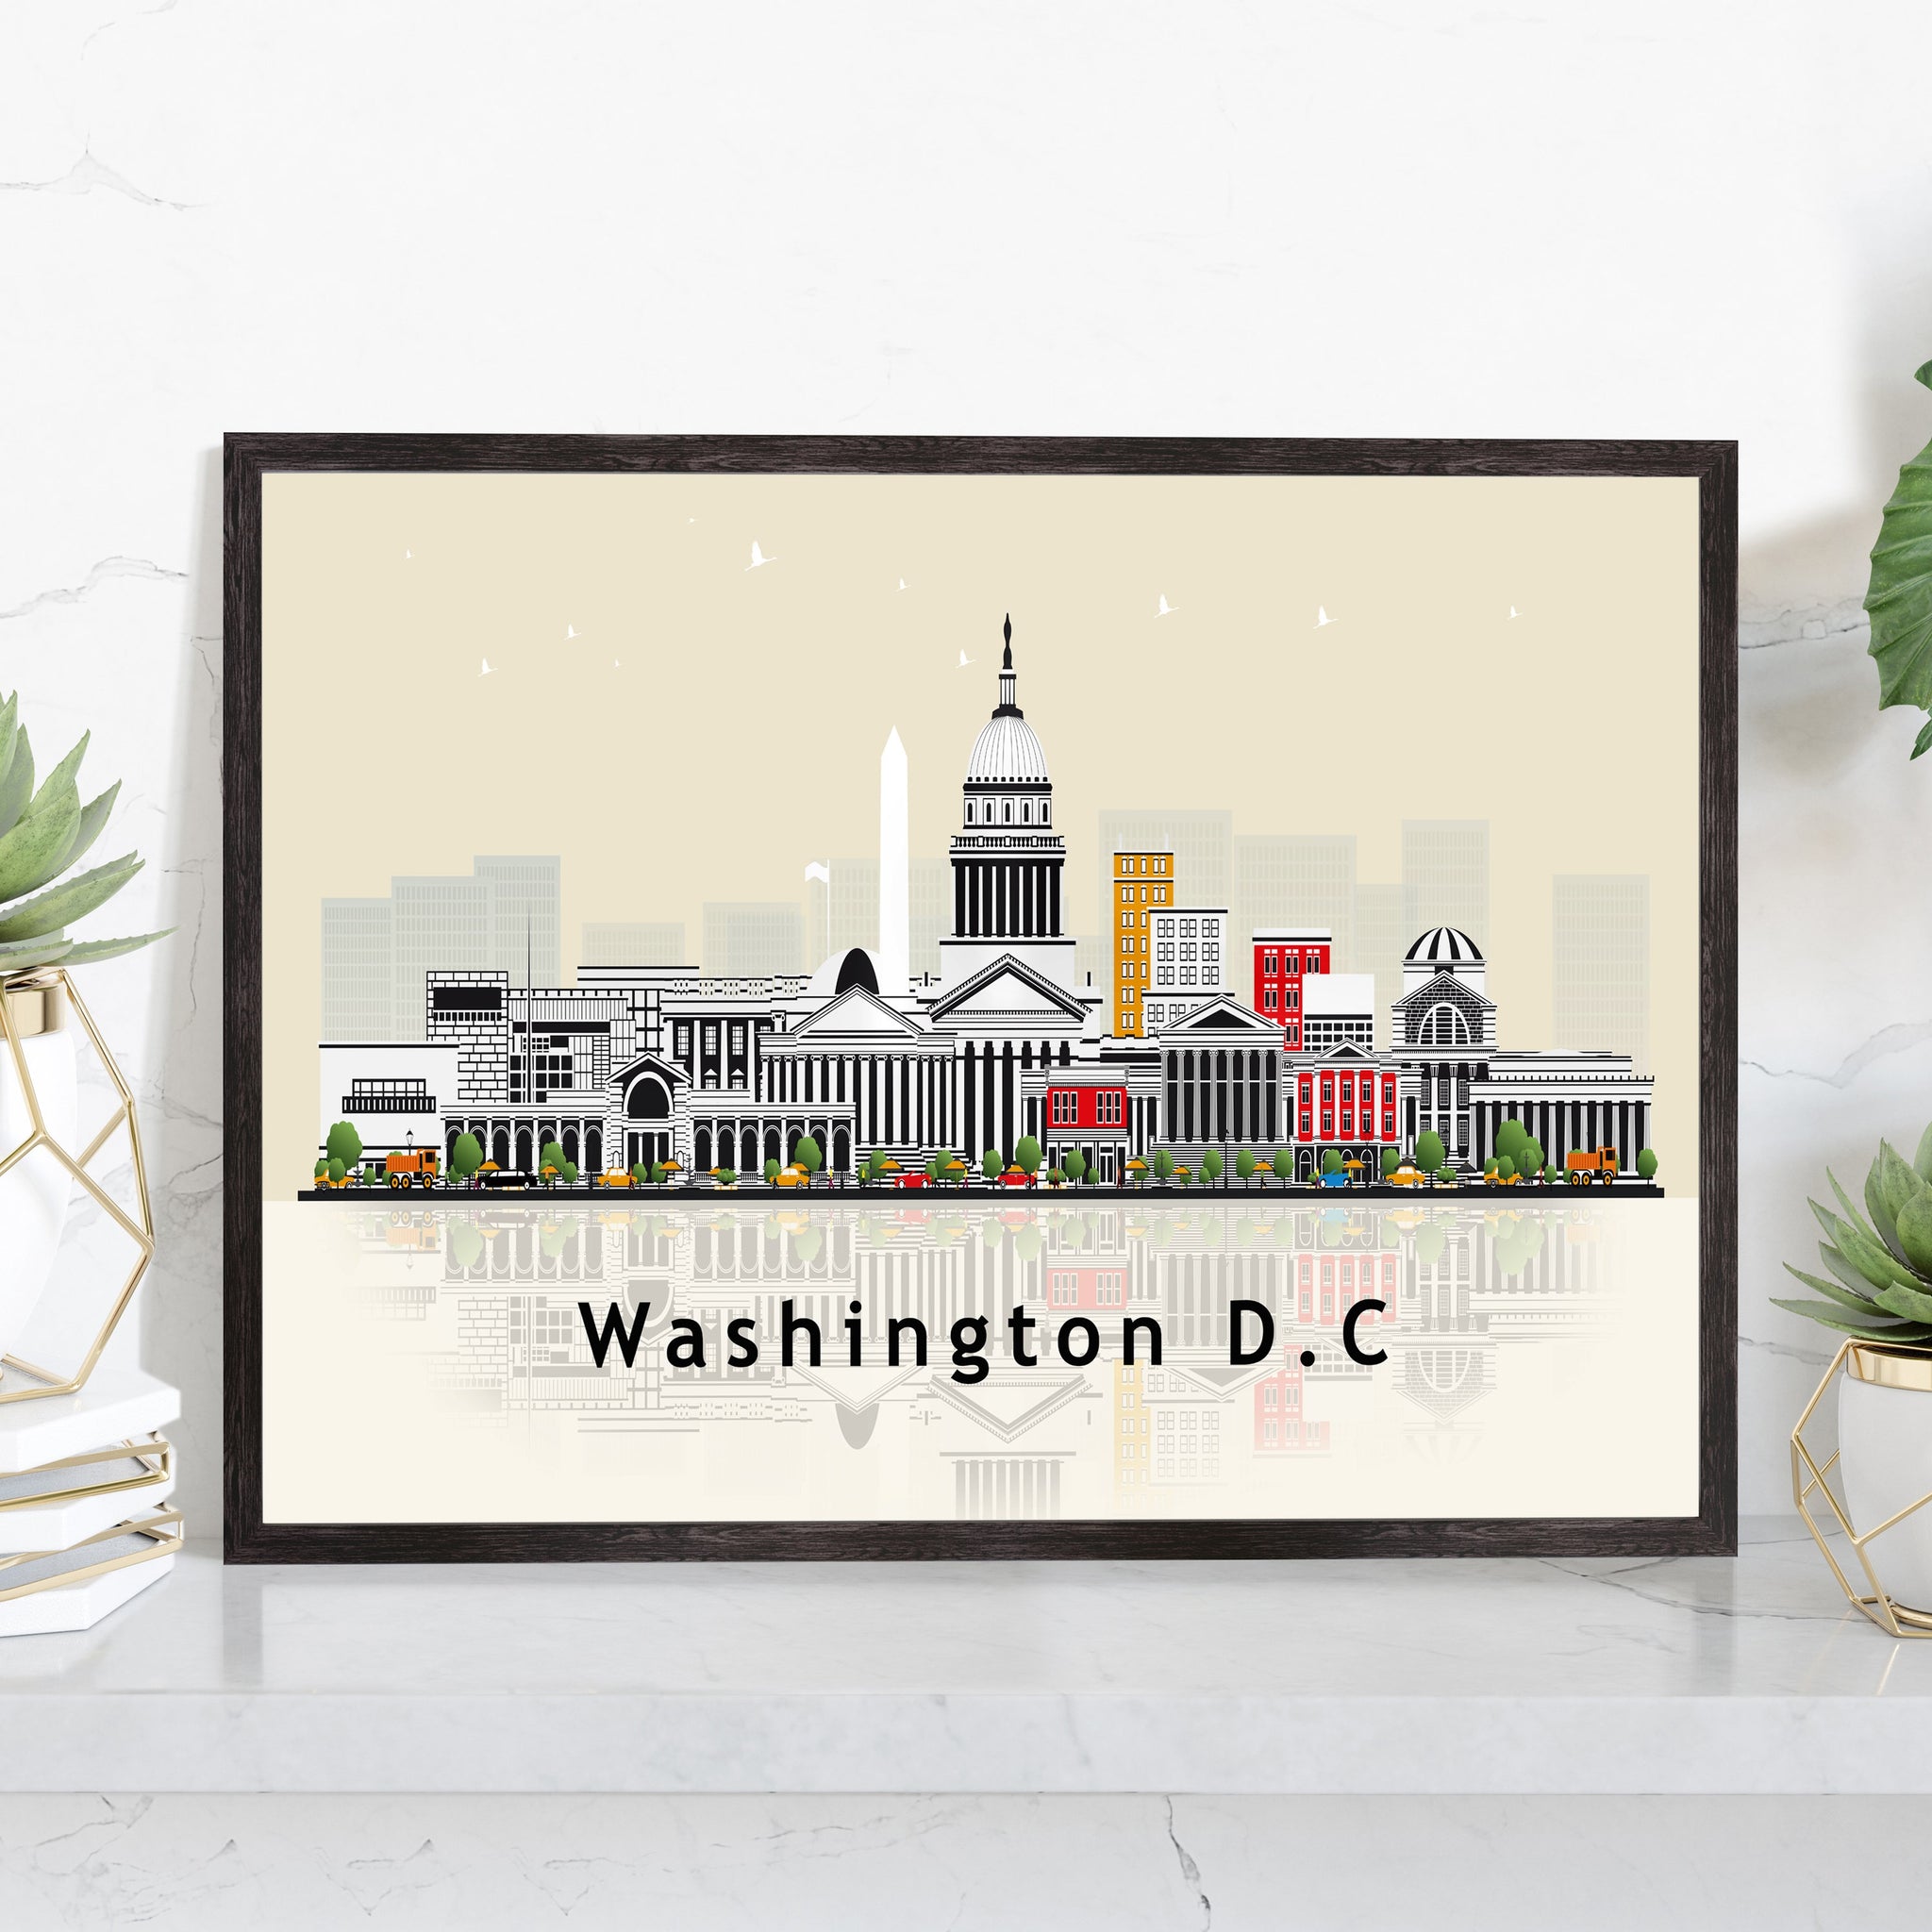 WASHINGTON DC Illustration skyline poster, Washington D.C state modern skyline cityscape poster print, Landmark map poster, Home wall art